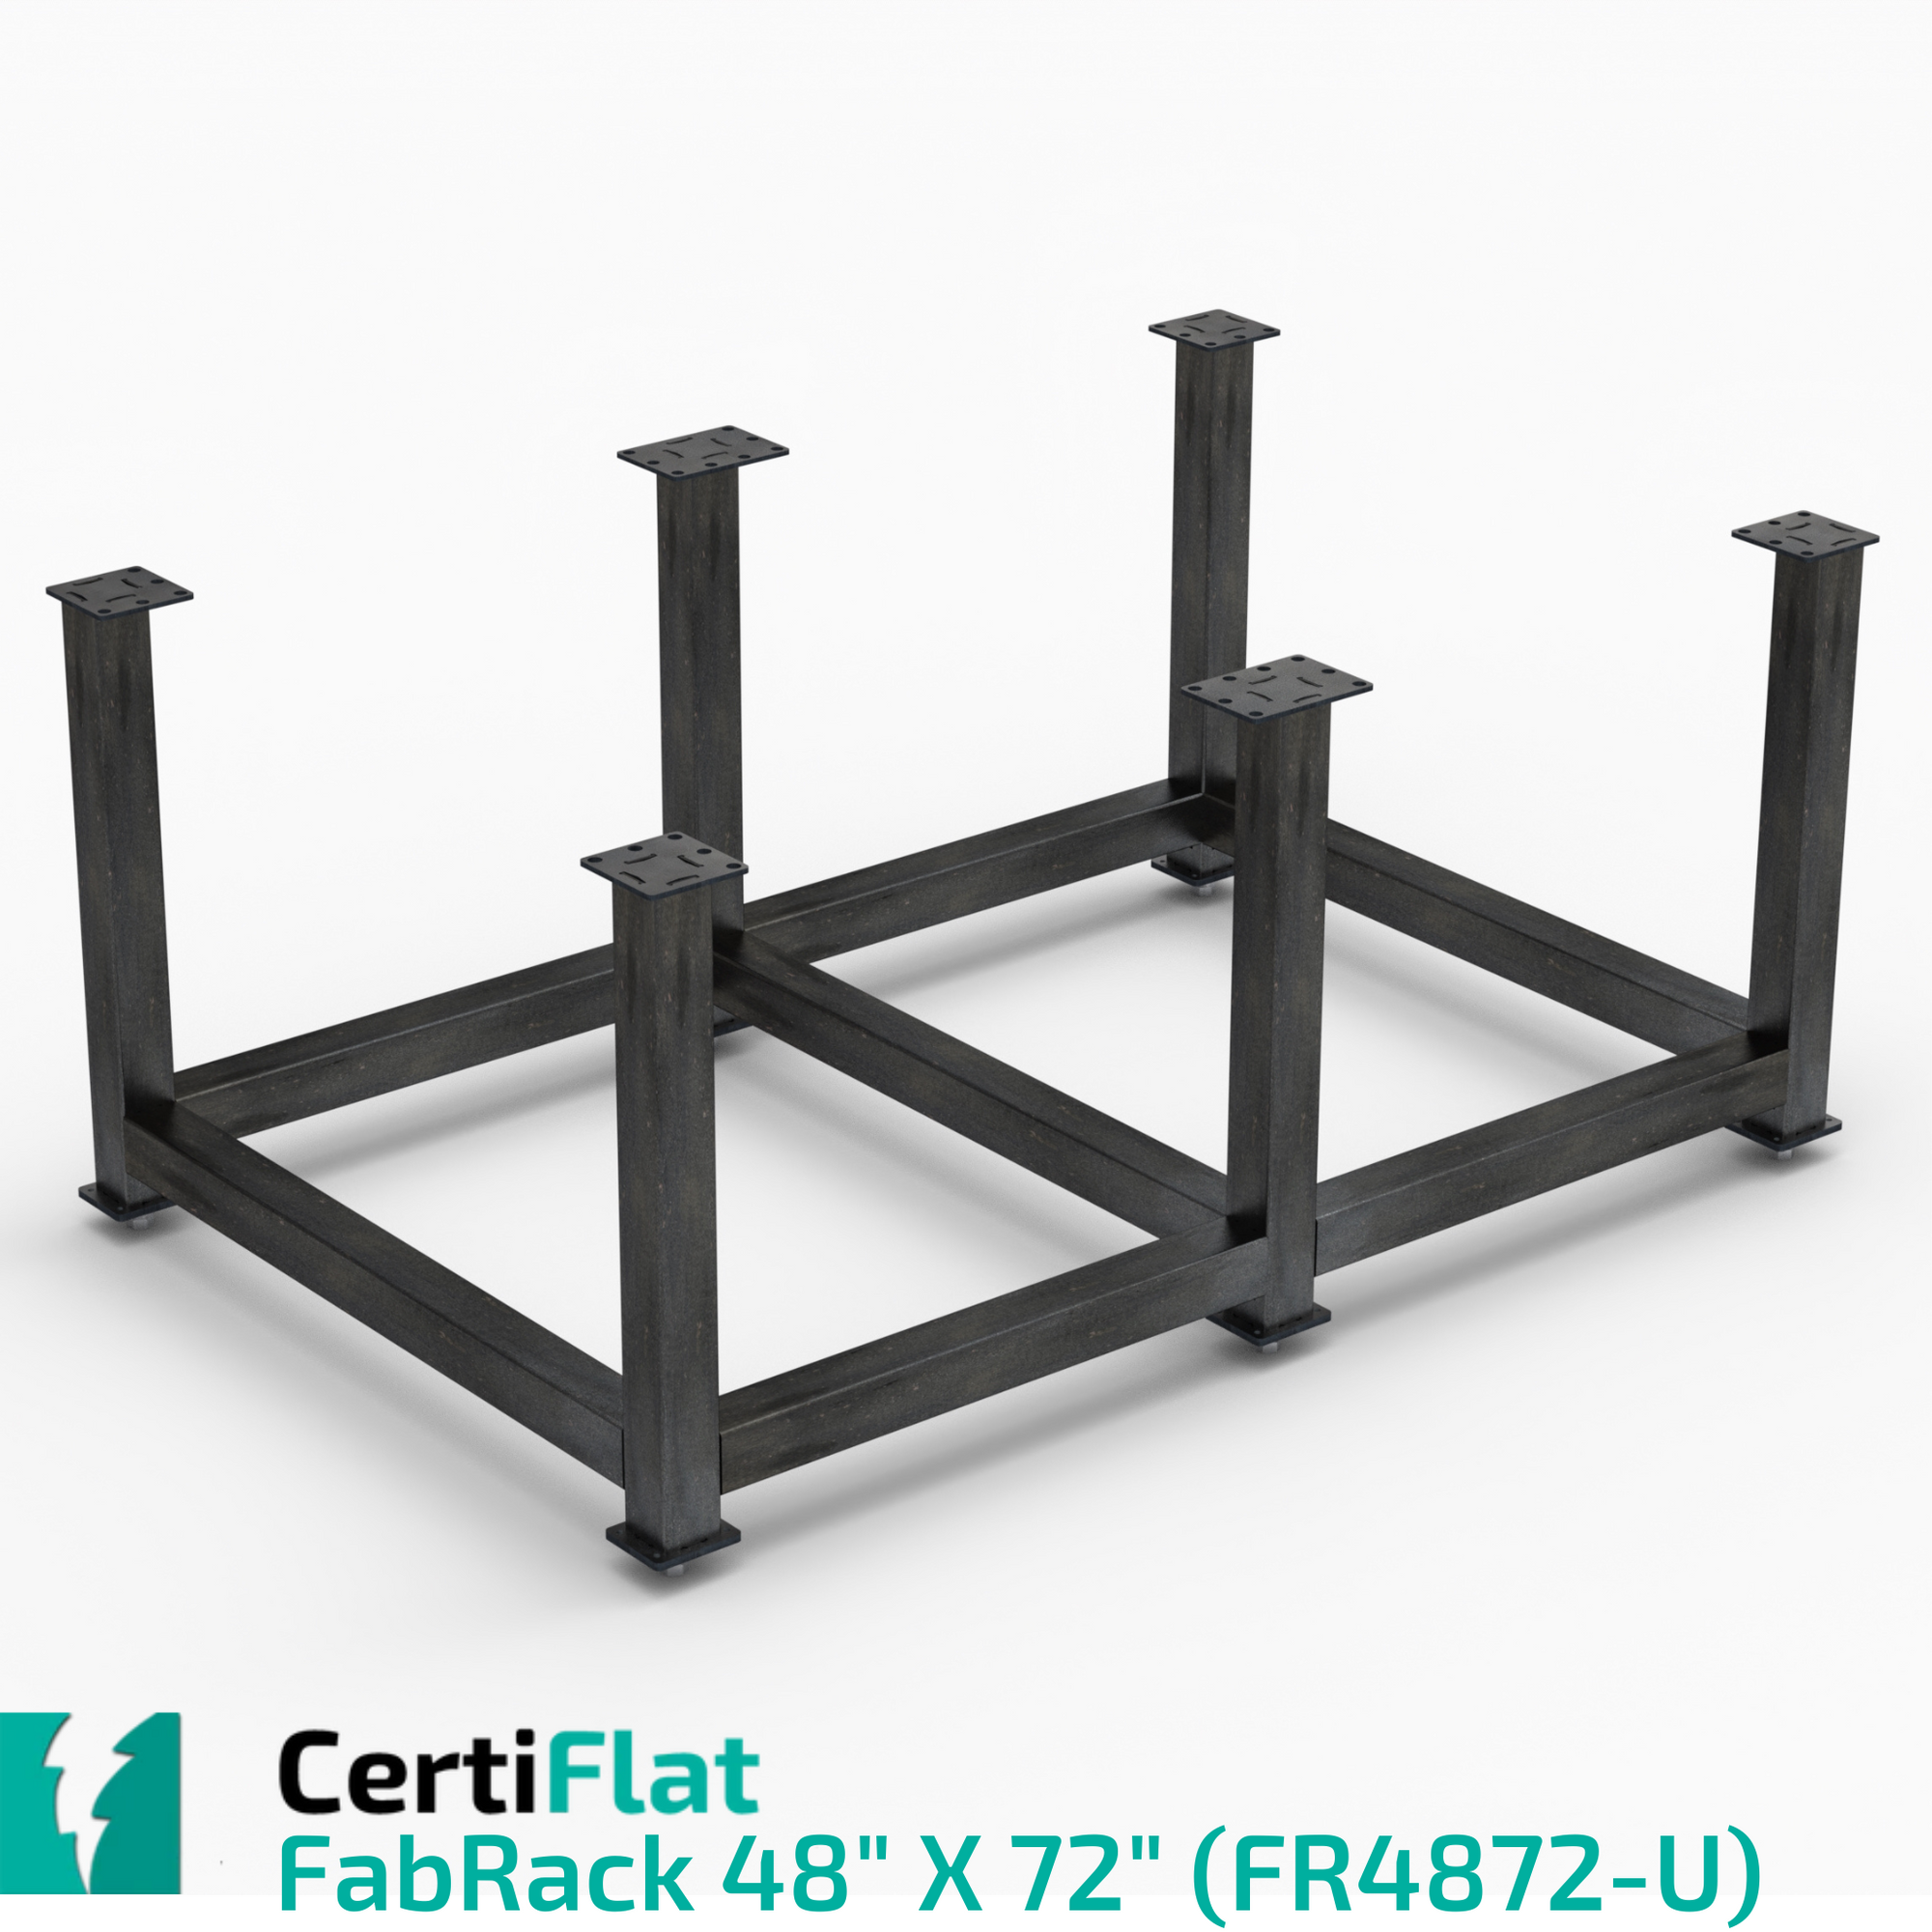 CertiFlat FabBlock Kit - FR4872 48"X72" FabRack CNC Tube Laser Leg 6 Kit For FabBlocks